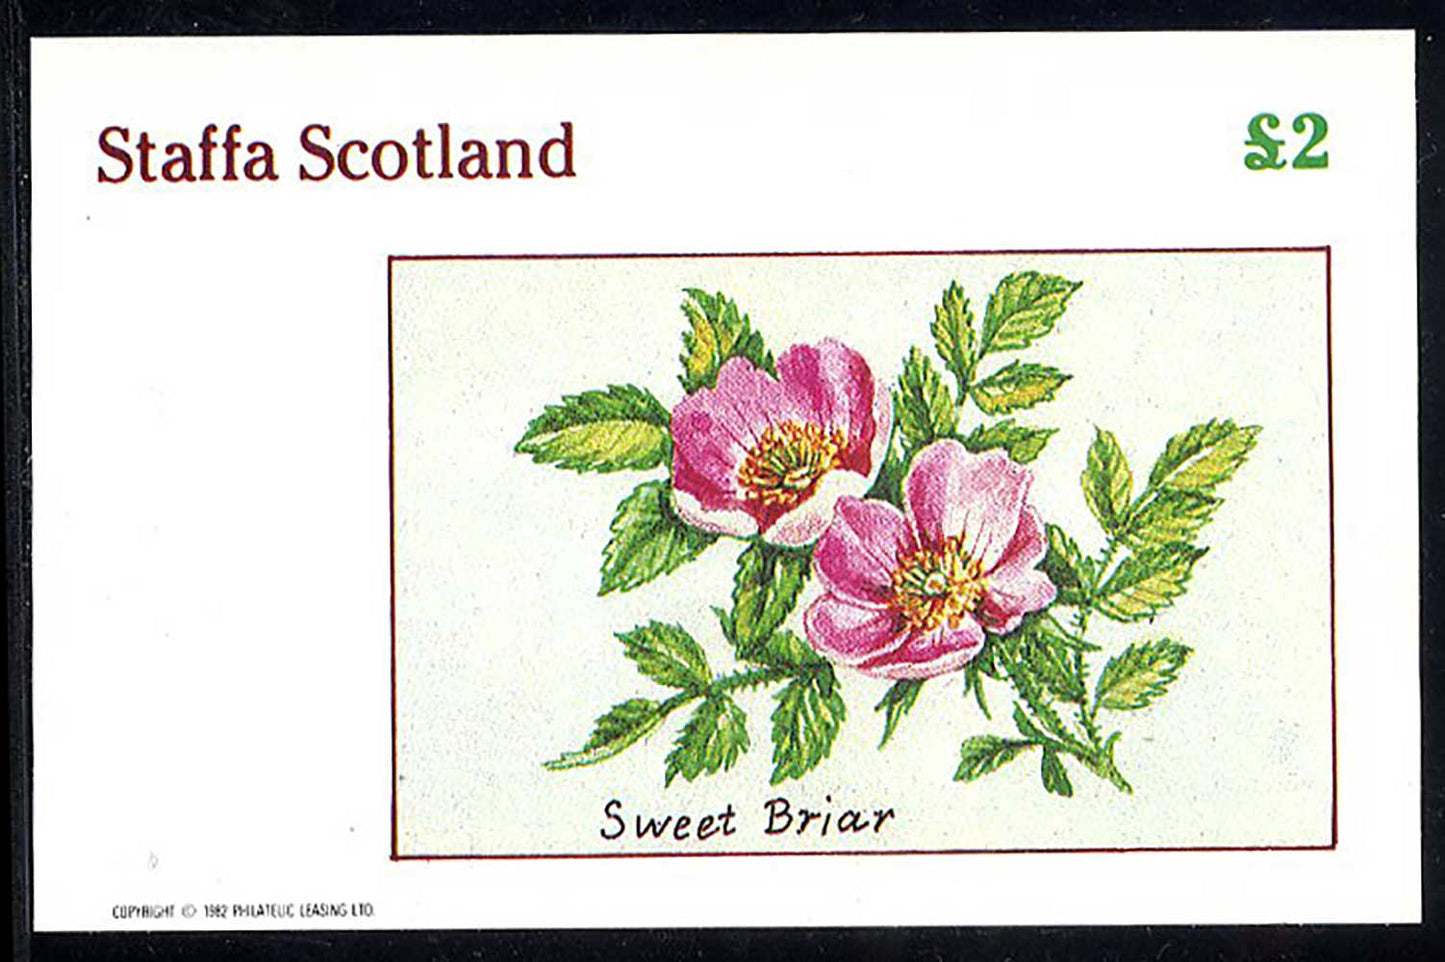 Staffa Wild Roses £2